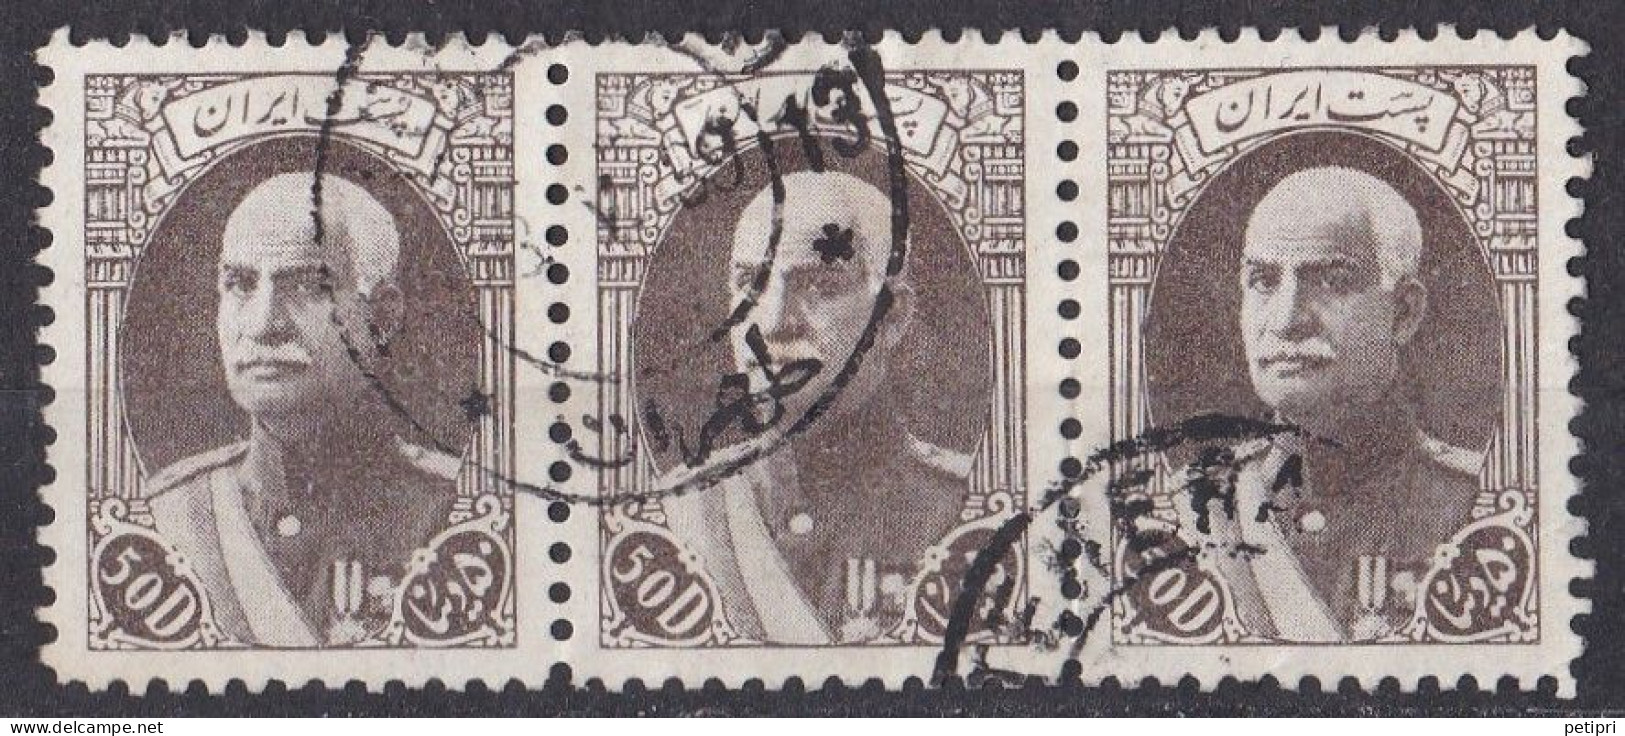 Asie  -  Iran  1938  -  Y&T  N °  641  Bande De 3 Oblitérés - Irán